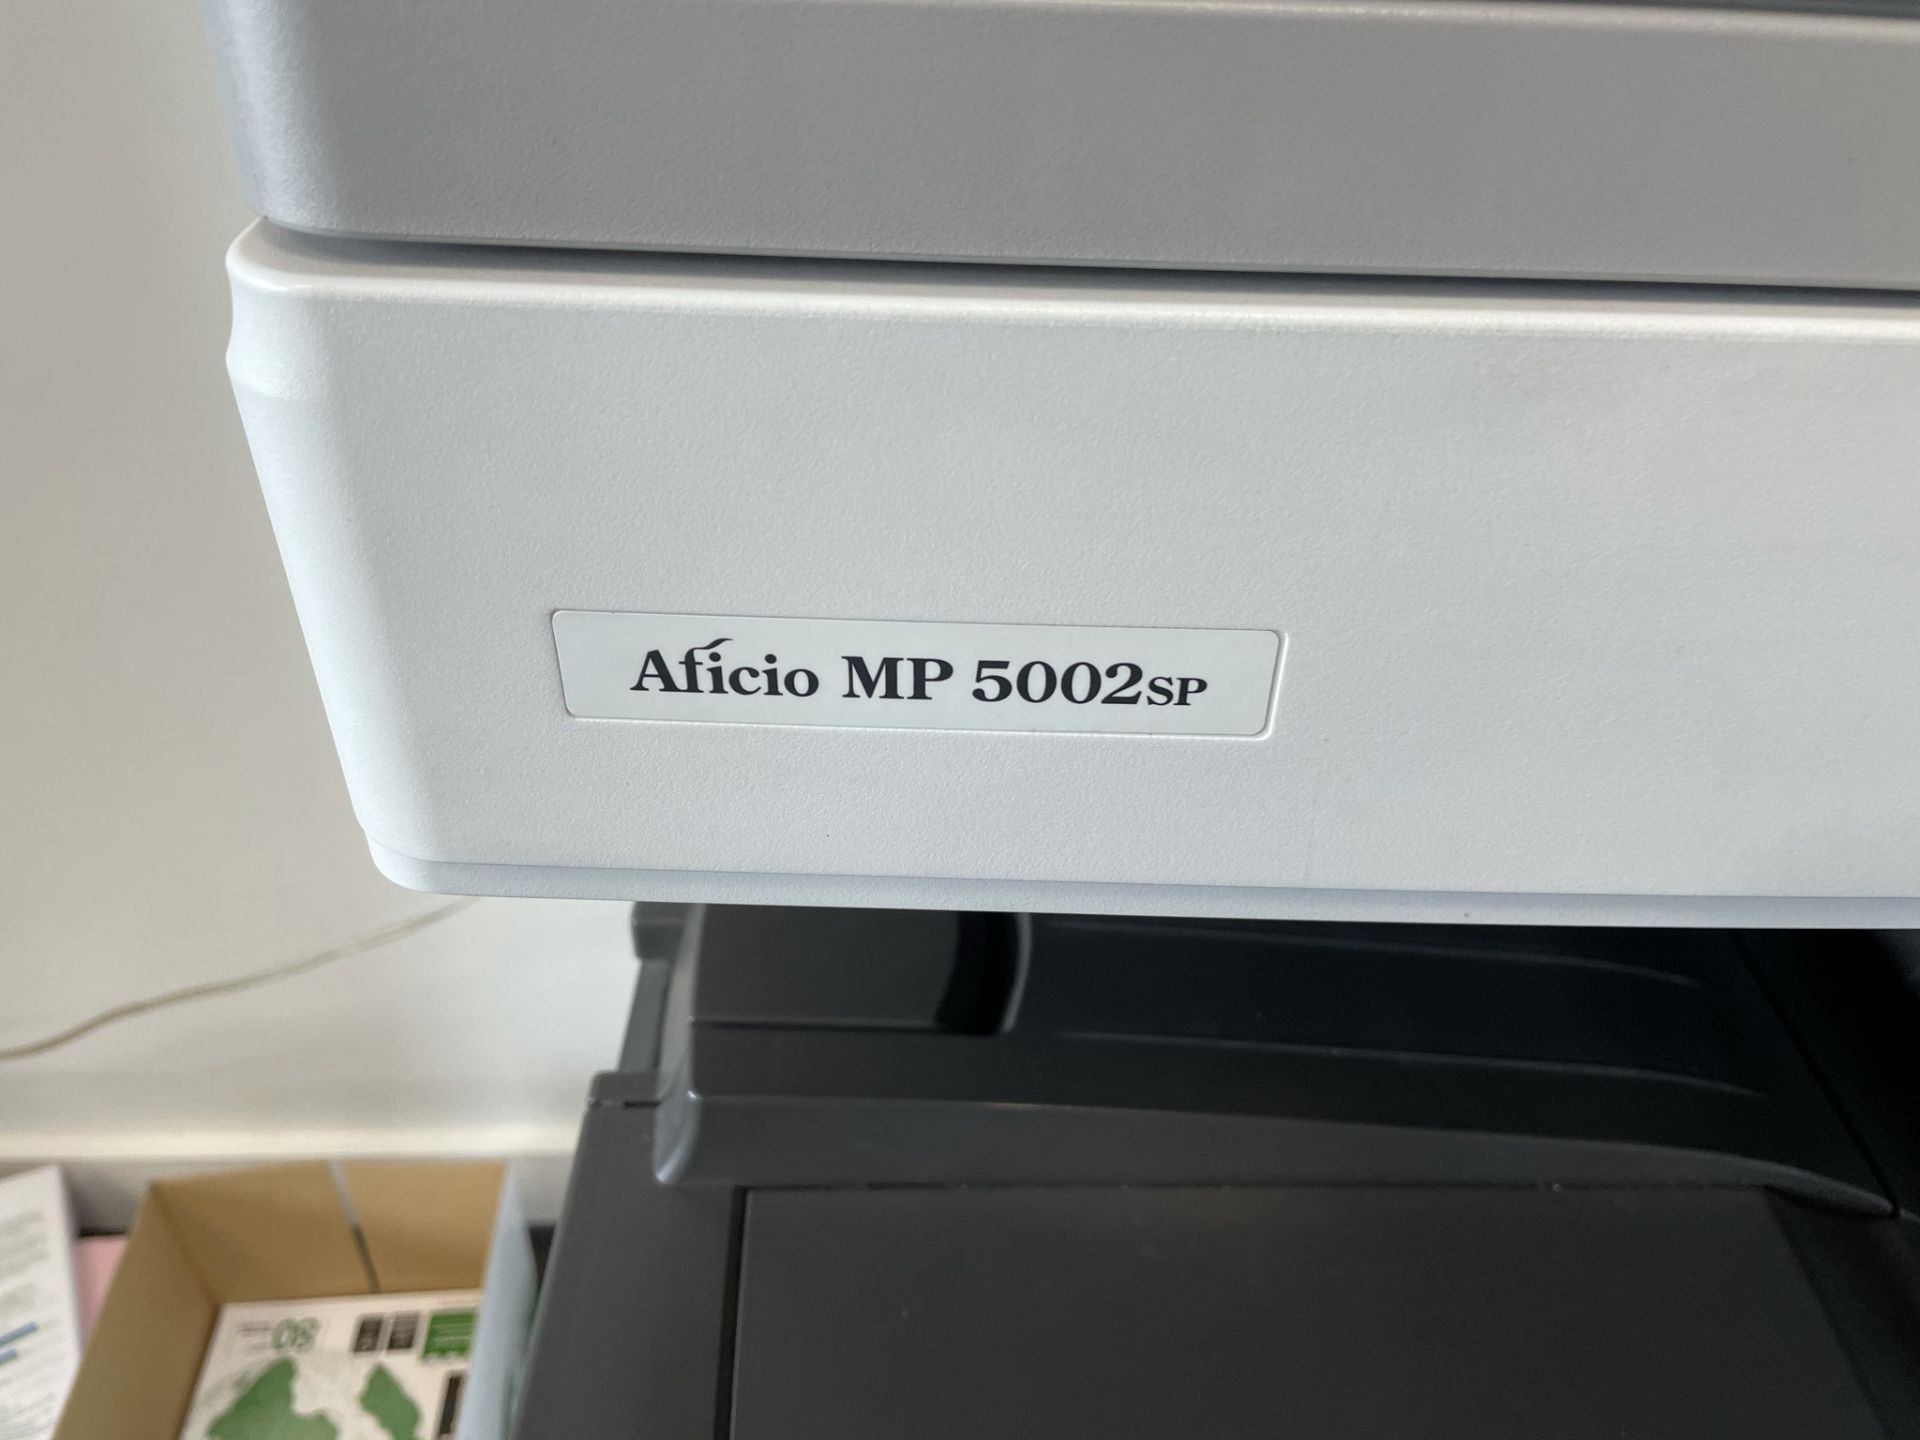 Ricoh Aficio MP 5002sp Multi-Functional Printer/Copier - Image 2 of 4